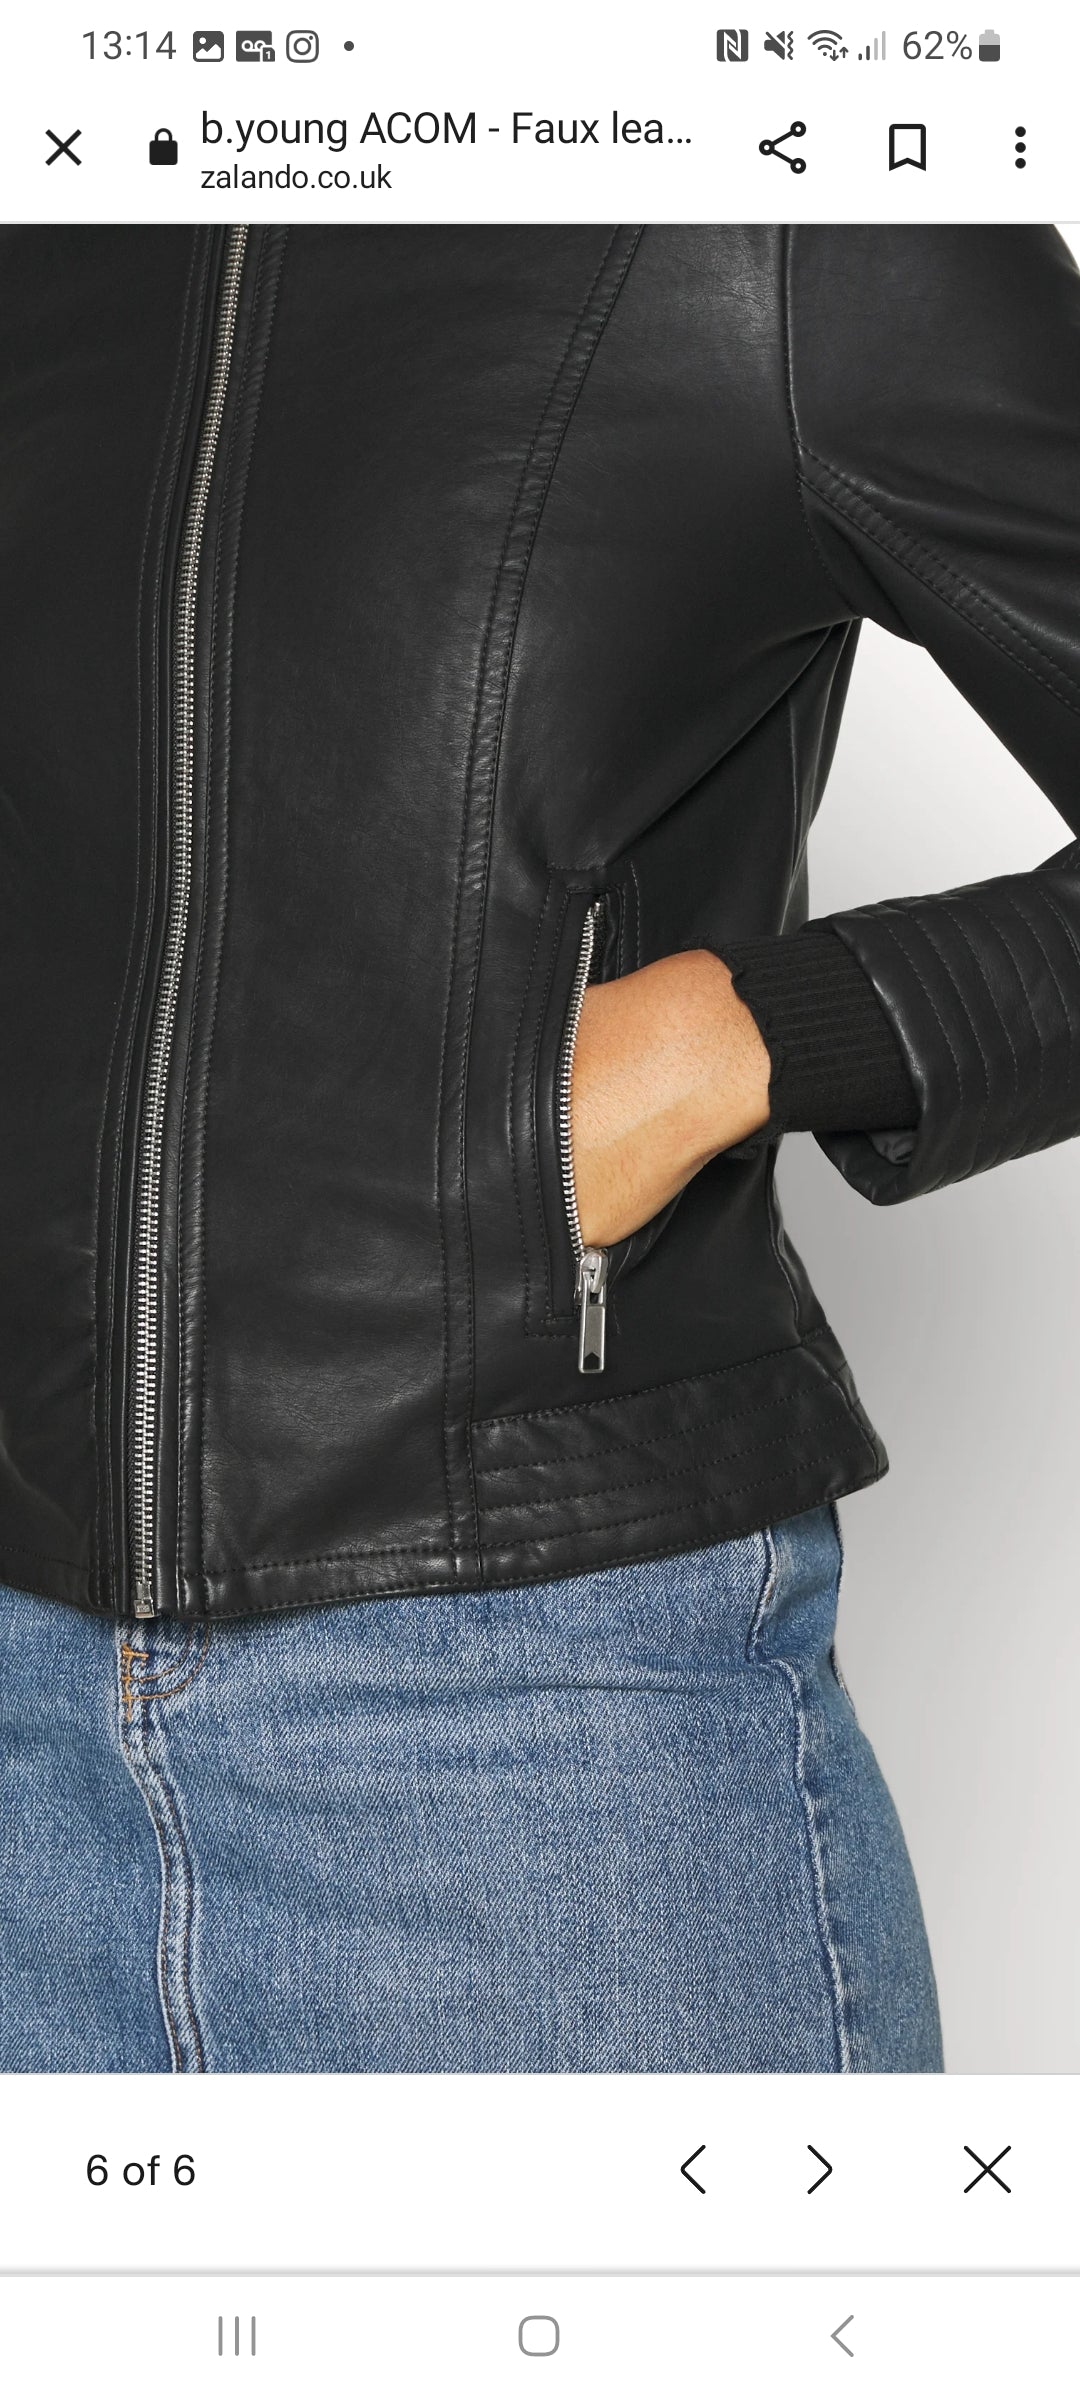 B young Acom black faux leather jacket 20809396